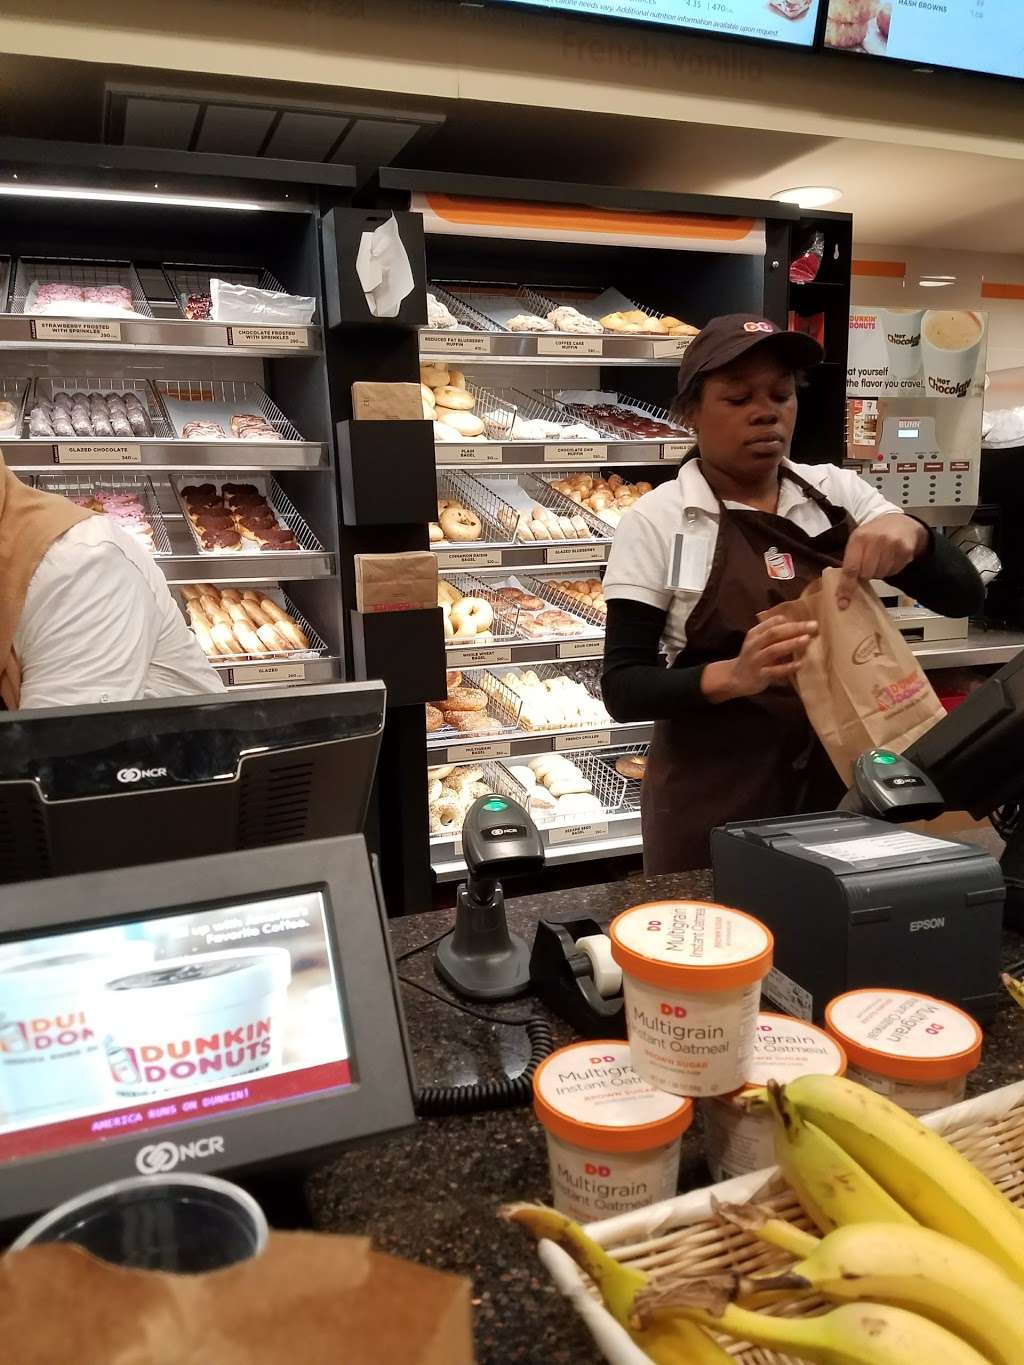 Dunkin Donuts | Terminal D, 8000 Essington Ave, Philadelphia, PA 19153, USA | Phone: (215) 365-7170